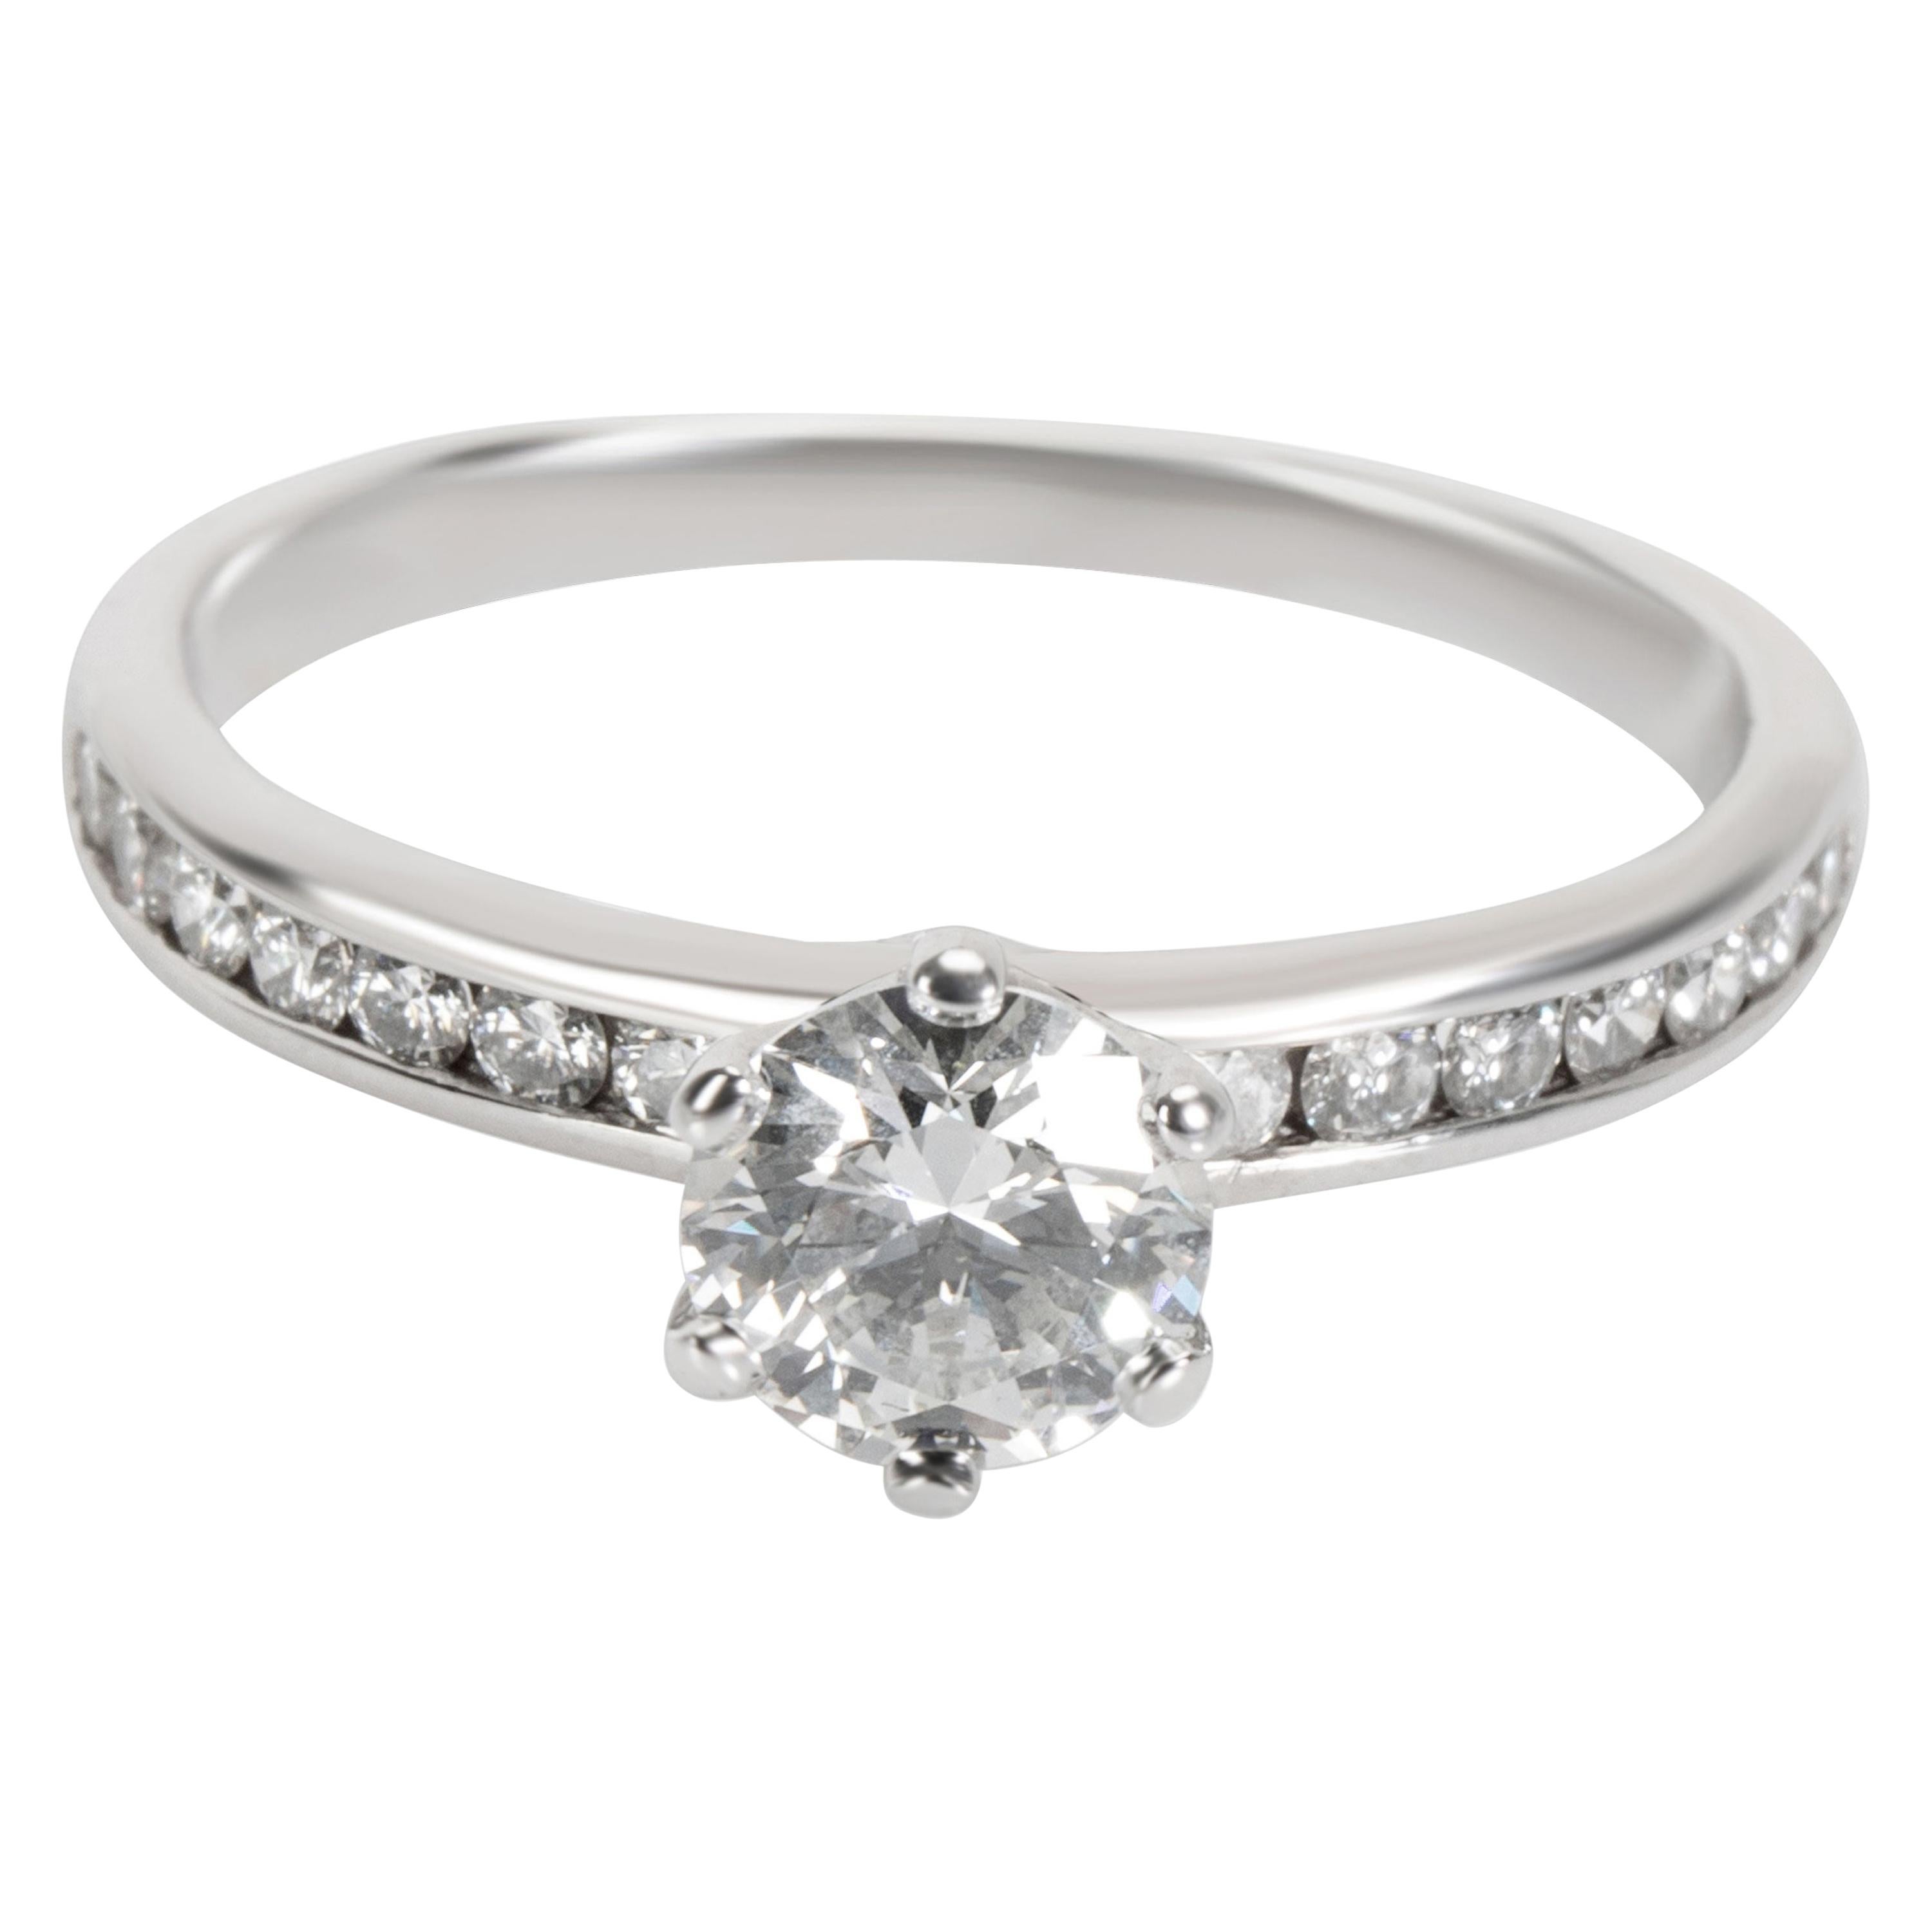 Tiffany & Co. Channel Diamond Engagement Ring in Platinum '0.62 Carat F/VVS1'